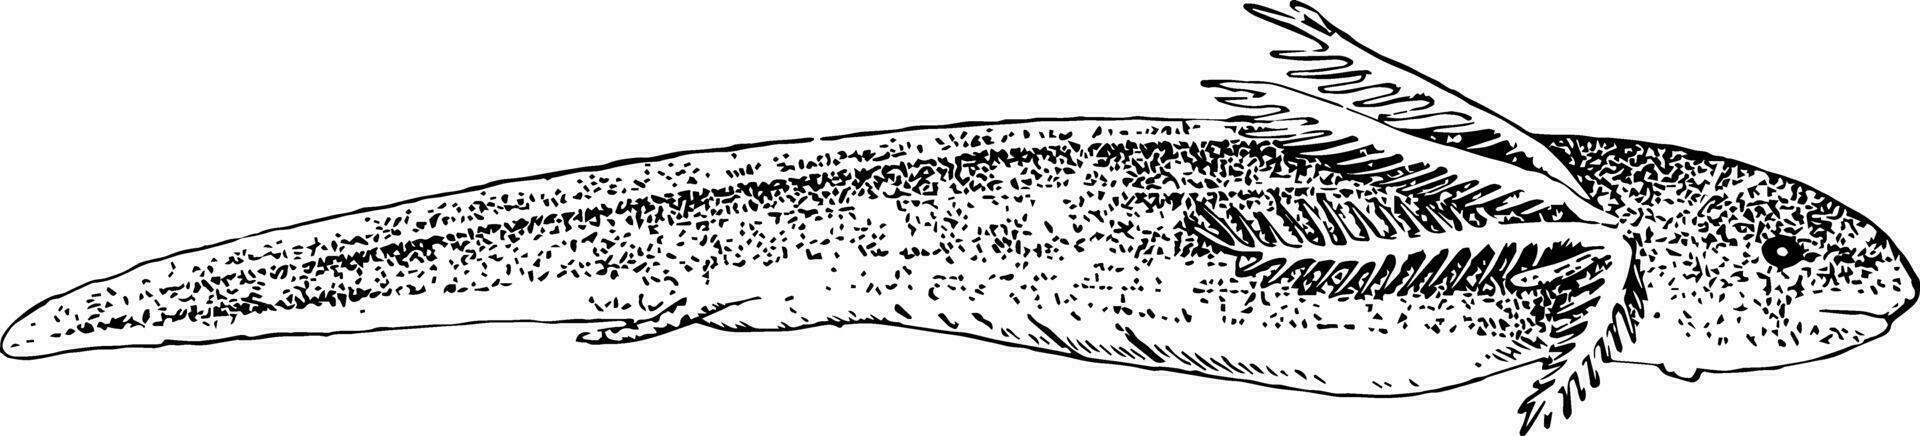 South American Lungfish Larva, vintage illustration. vector